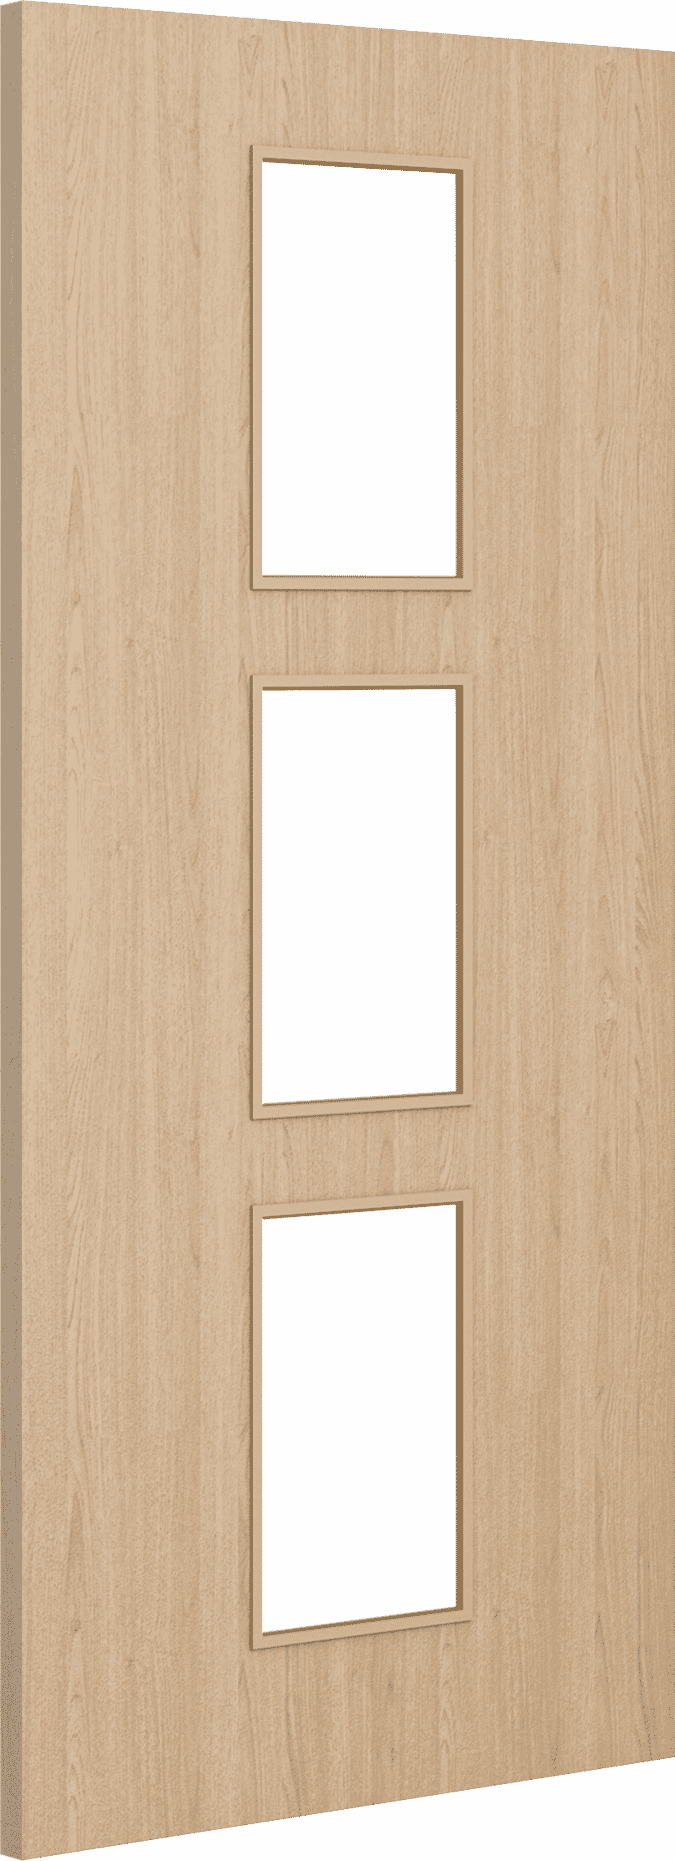 2040mm x 526mm x 44mm Architectural Oak 11 Frosted Glazed - Prefinished FD30 Fire Door Blank